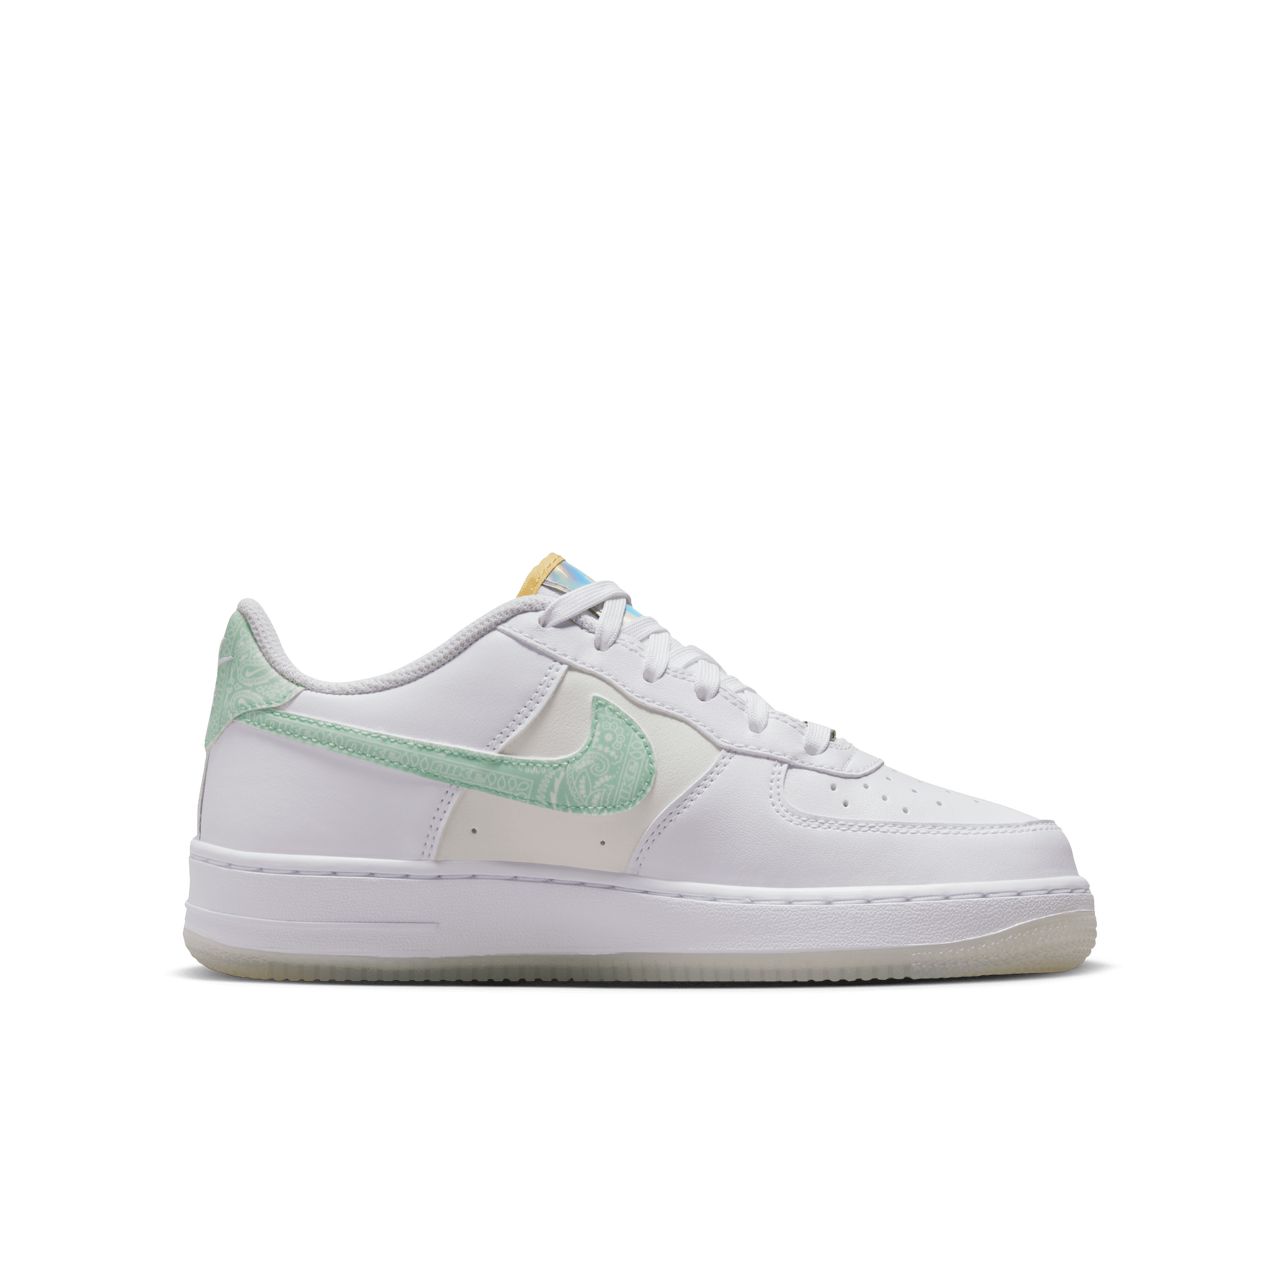 Nike Air Force 1 LV8 Schuh für ältere Kinder - Weiß